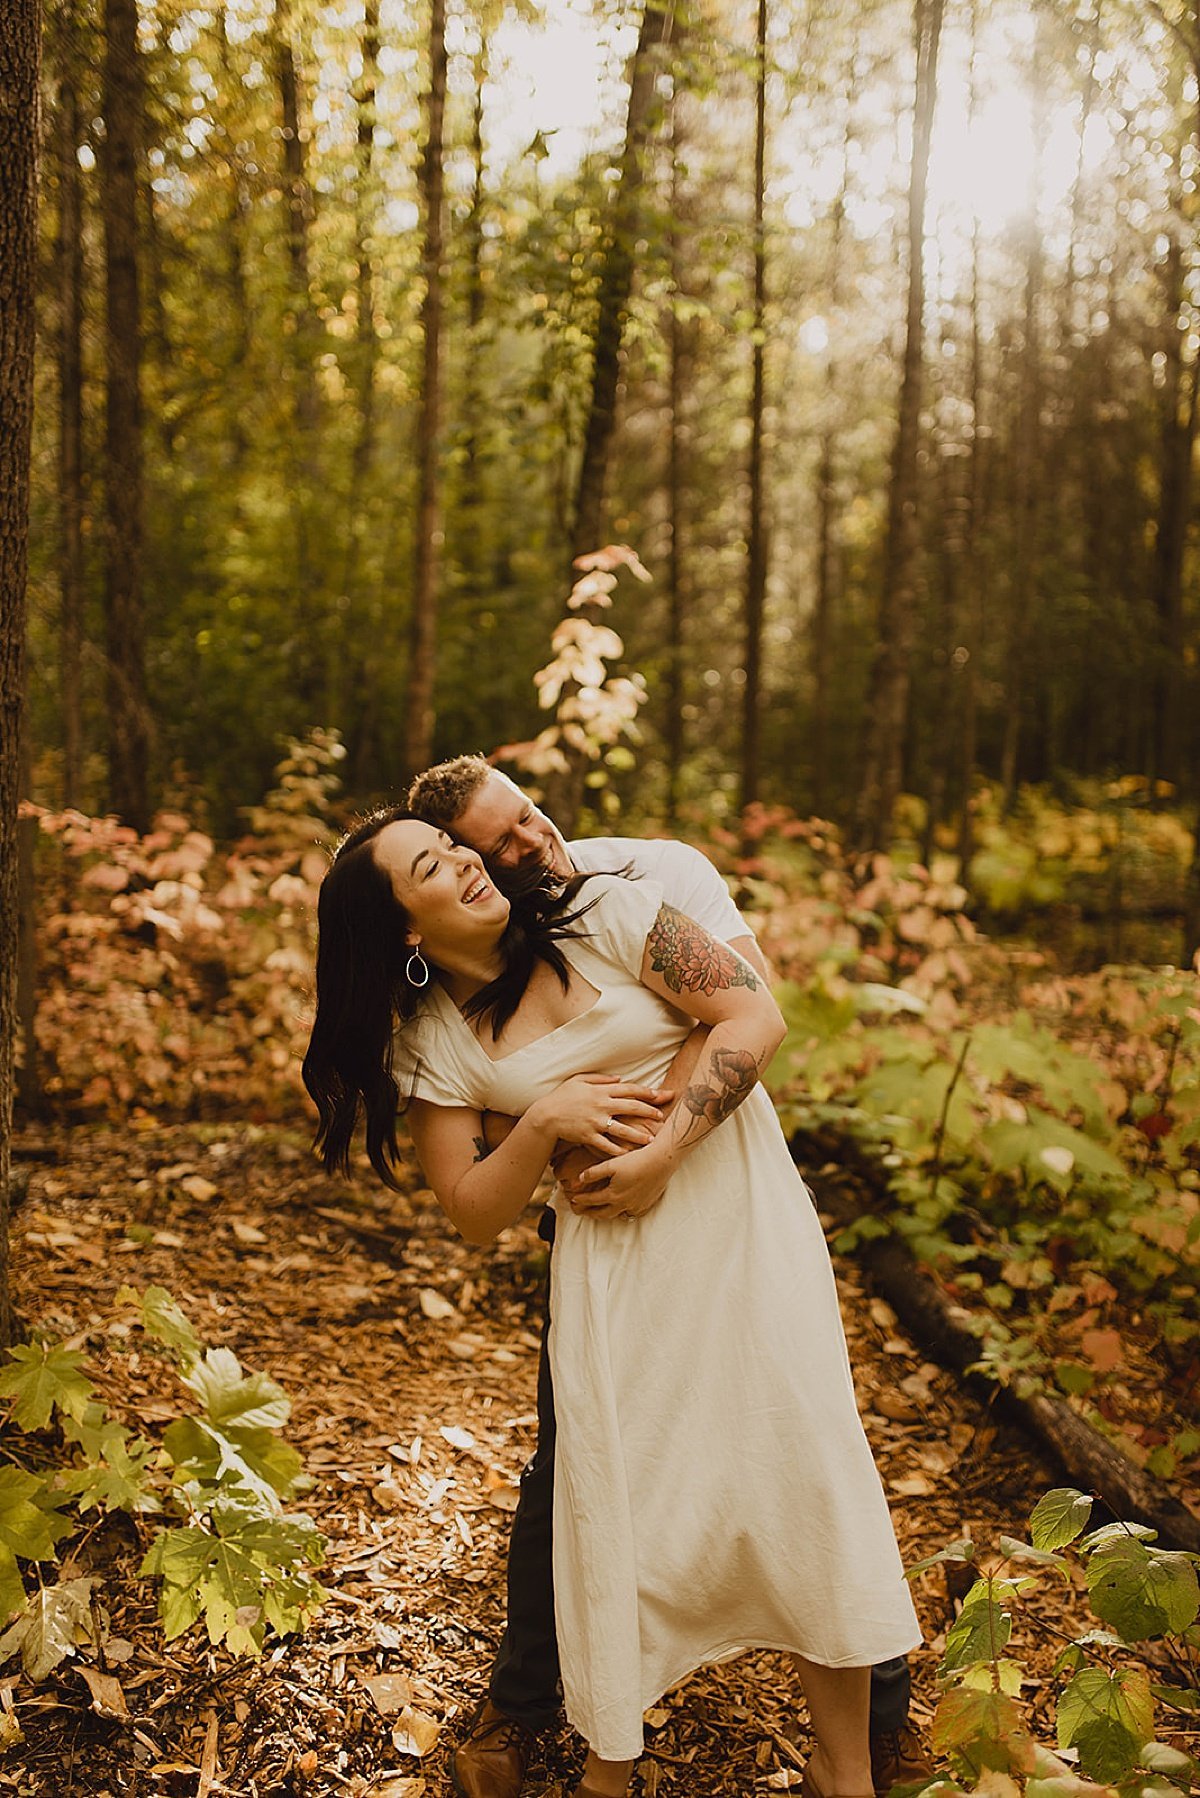  Man and woman playfully hug in woodsy engagement shoot by alaska wedding photographer Theresa McDonald 